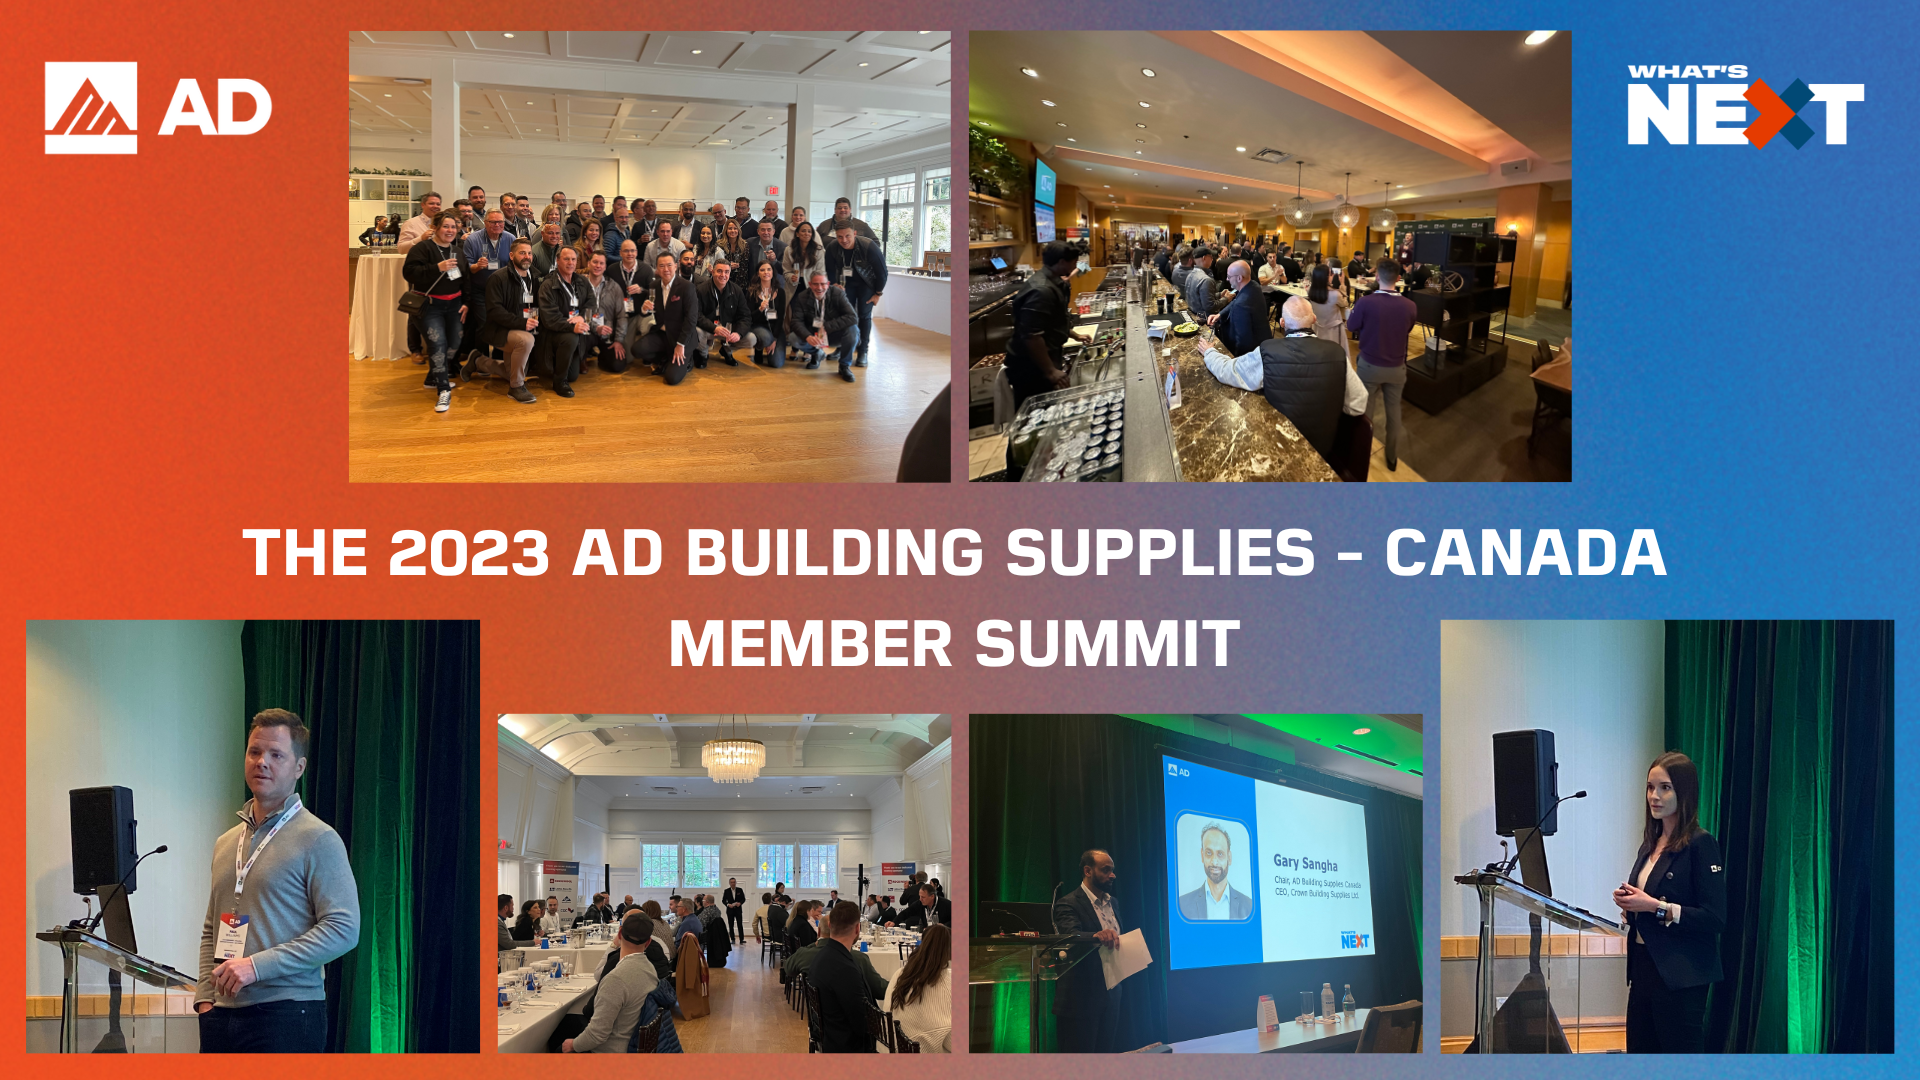 AD Building Supplies – Canada facilitates collaboration during inaugural divisional meeting